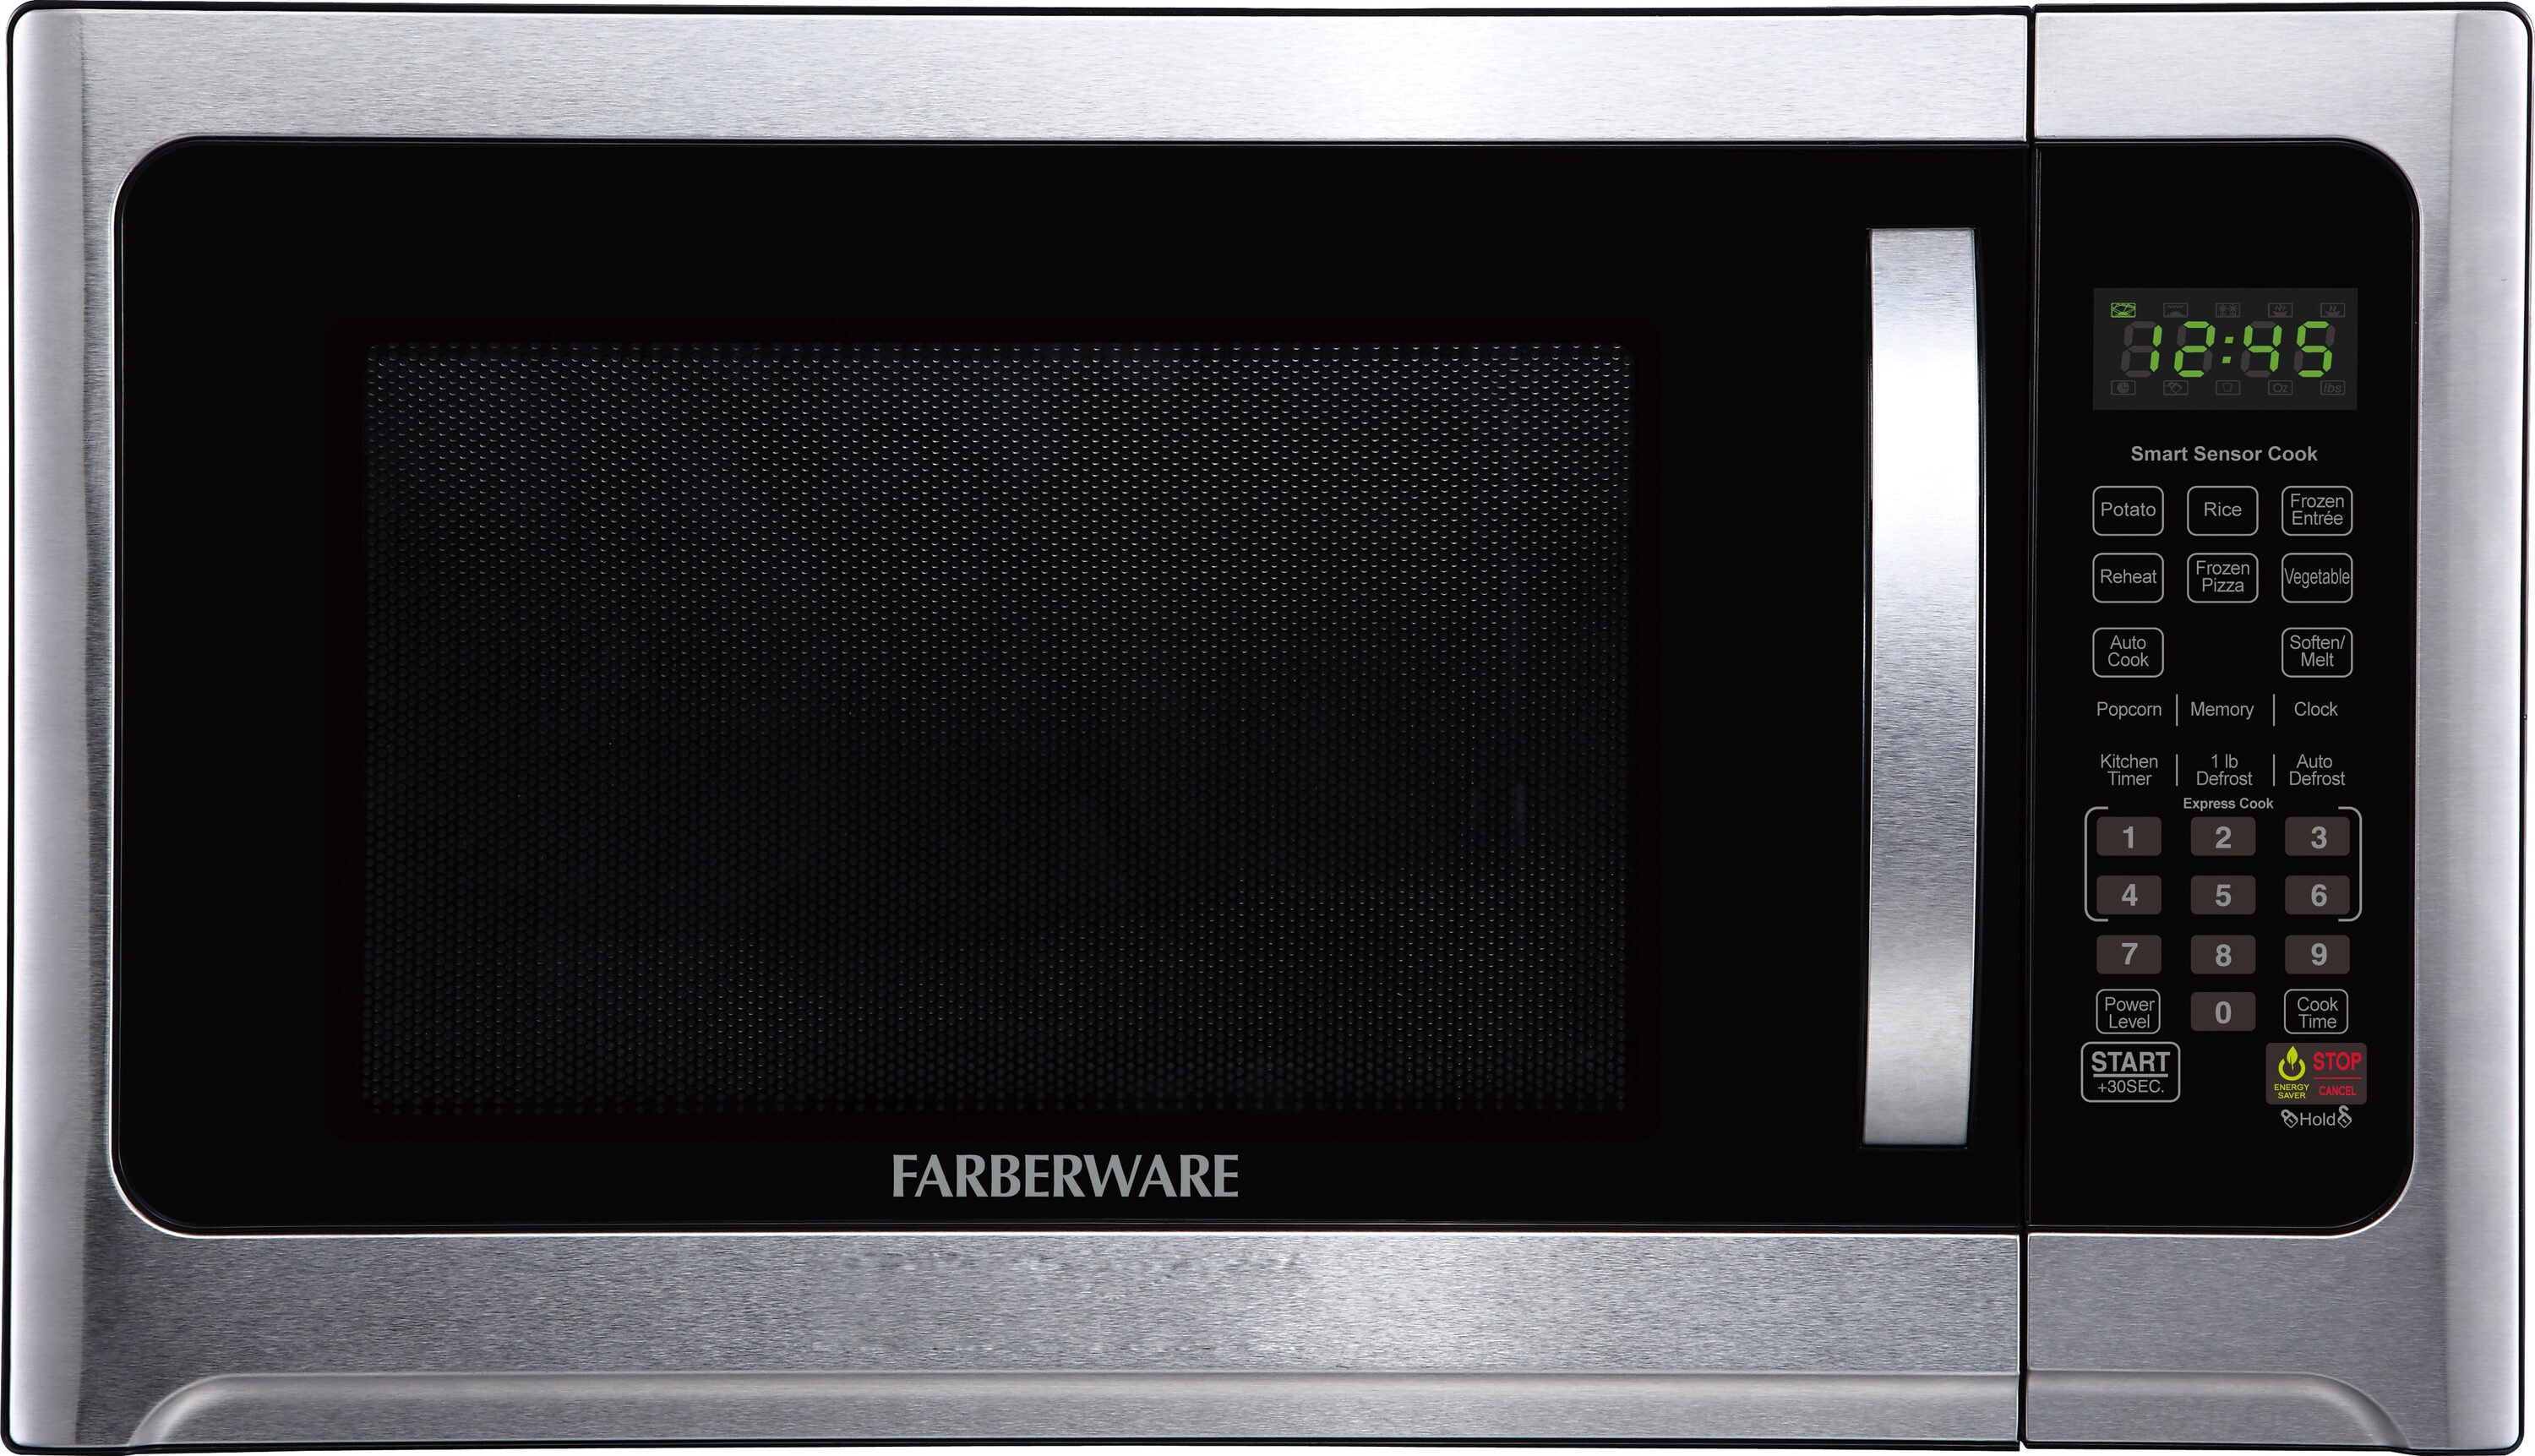 Farberware Professional 1.1 cu. Ft. 1000-Watt Countertop Microwave